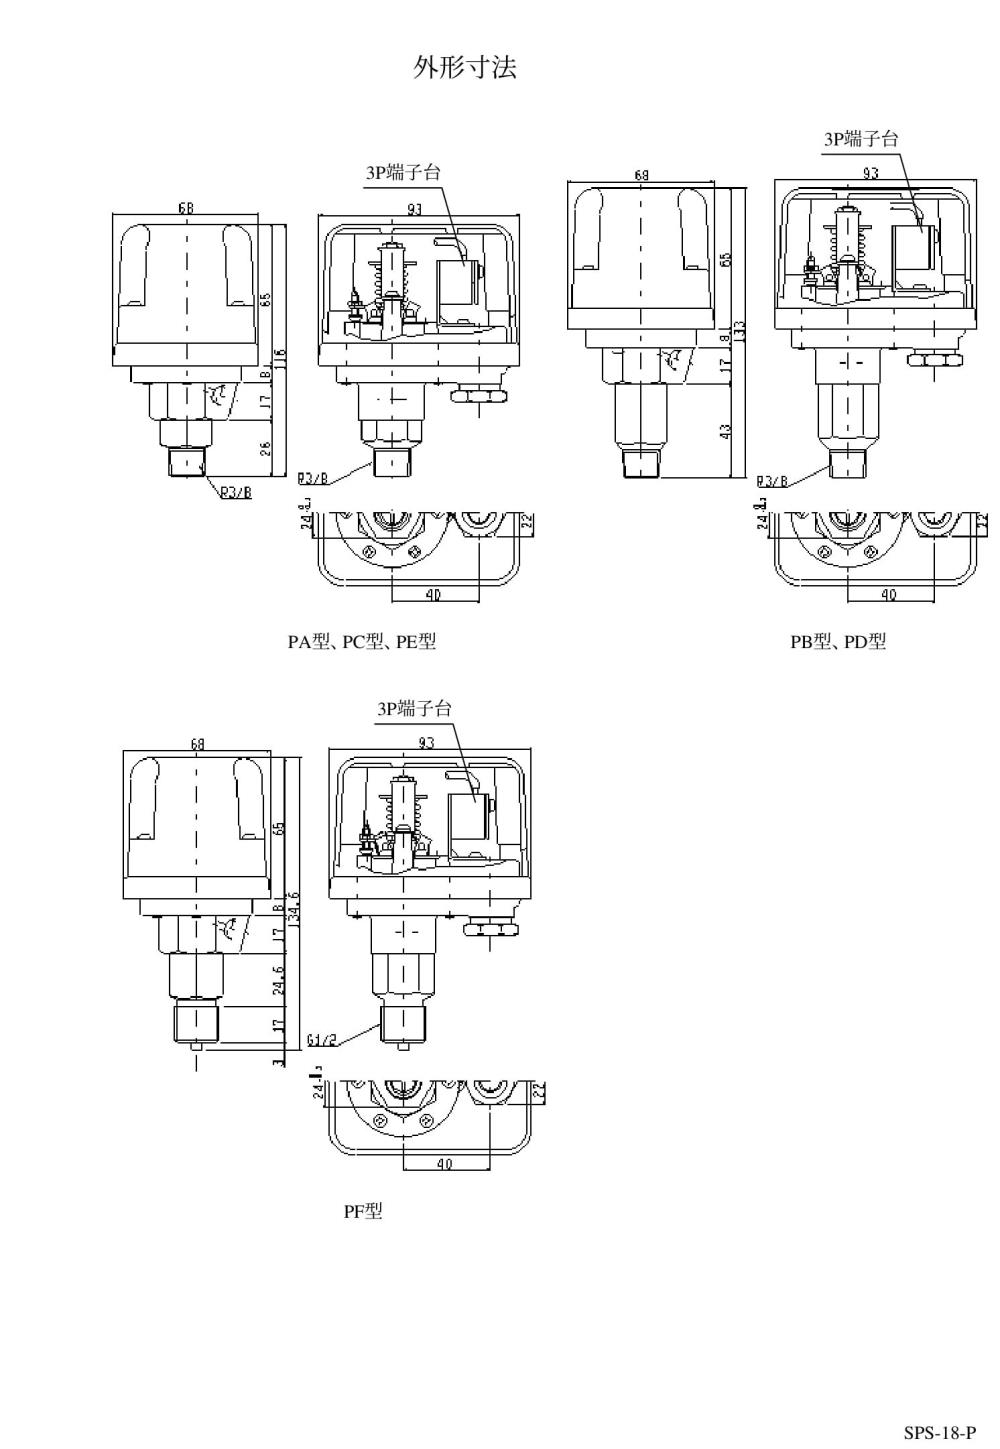 SANWA DENKI Pressure Switch SPS-18-P-D, C3604BD Series